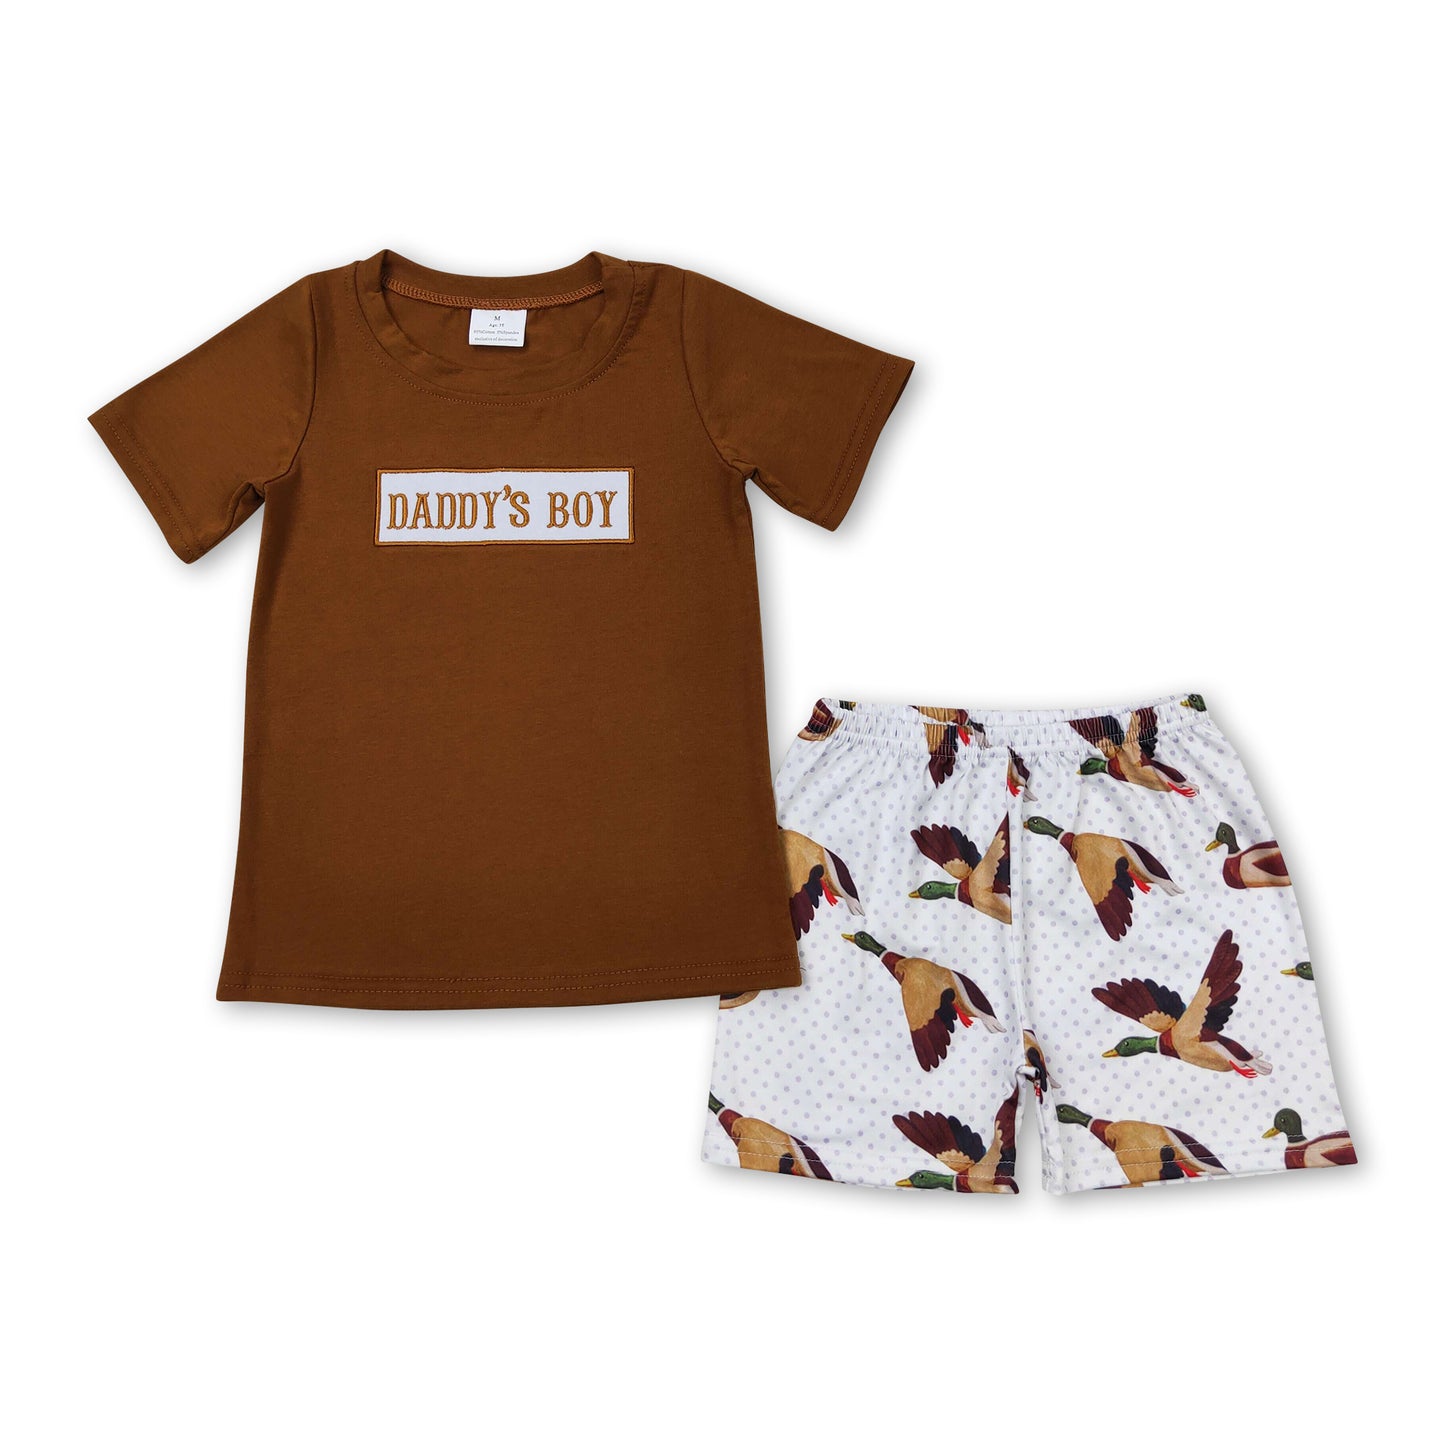 Daddy's boy shirt duck shorts boys summer outfits